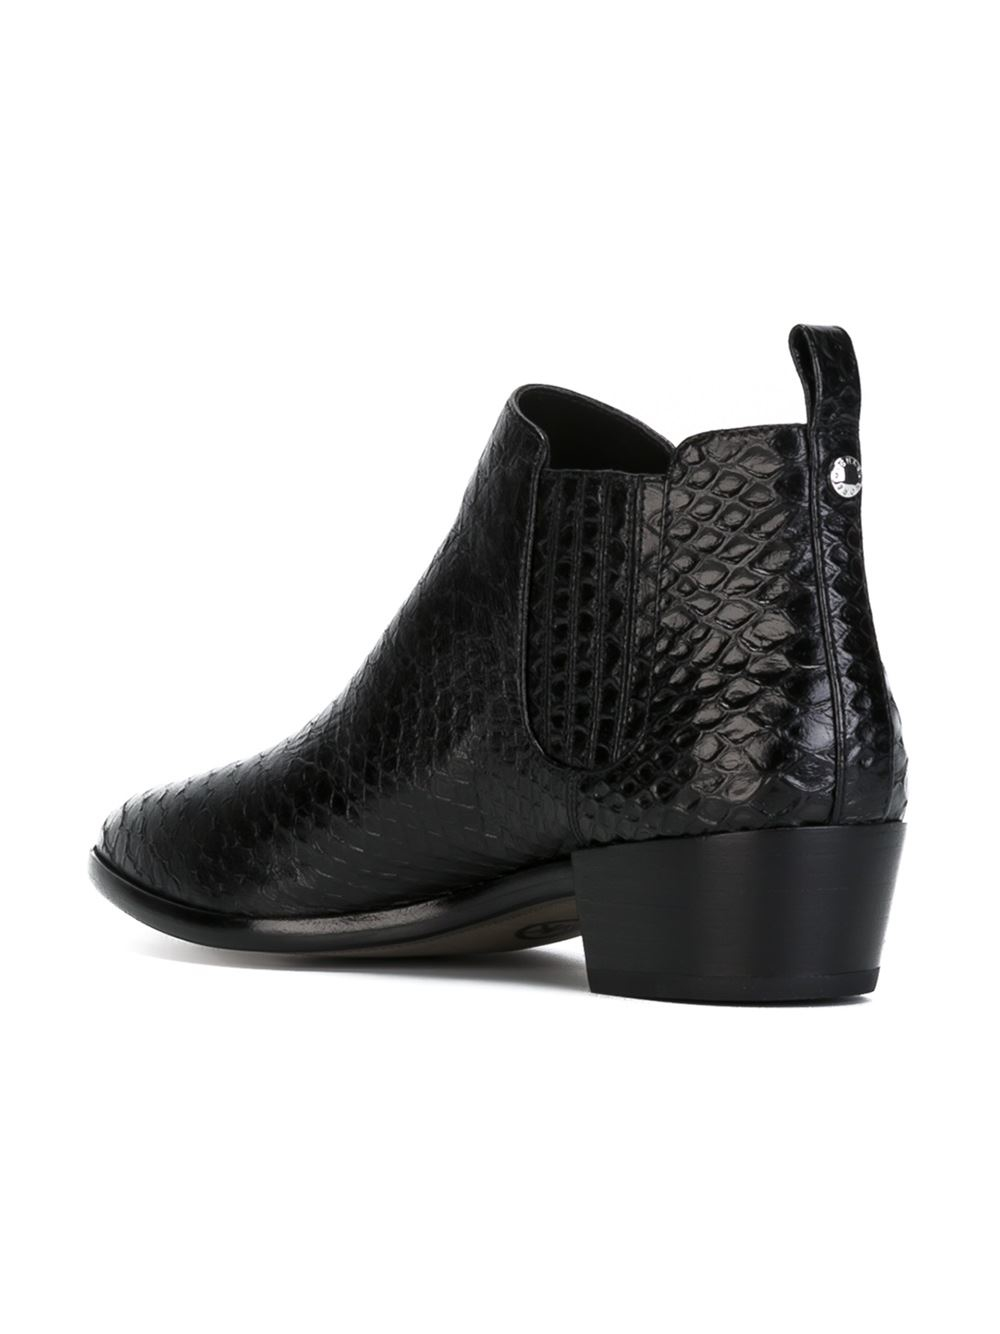 black snakeskin boots womens